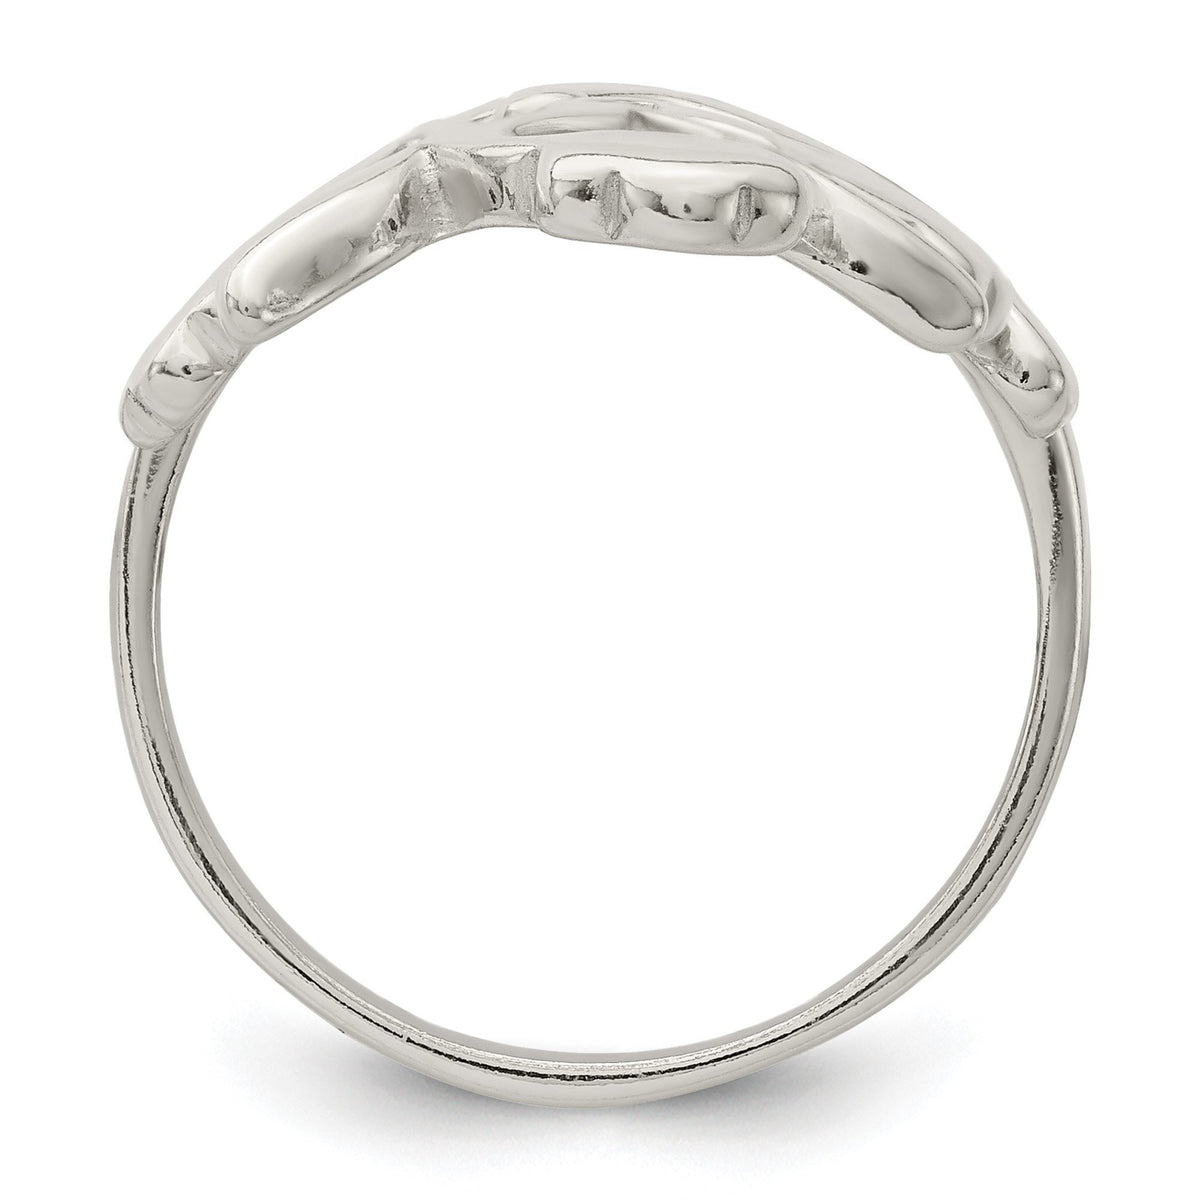 Sterling Silver Full Finger Vine Ring Sizes 6 - 8  Ring Gift Box Included Mothers Day Gift Best Seller